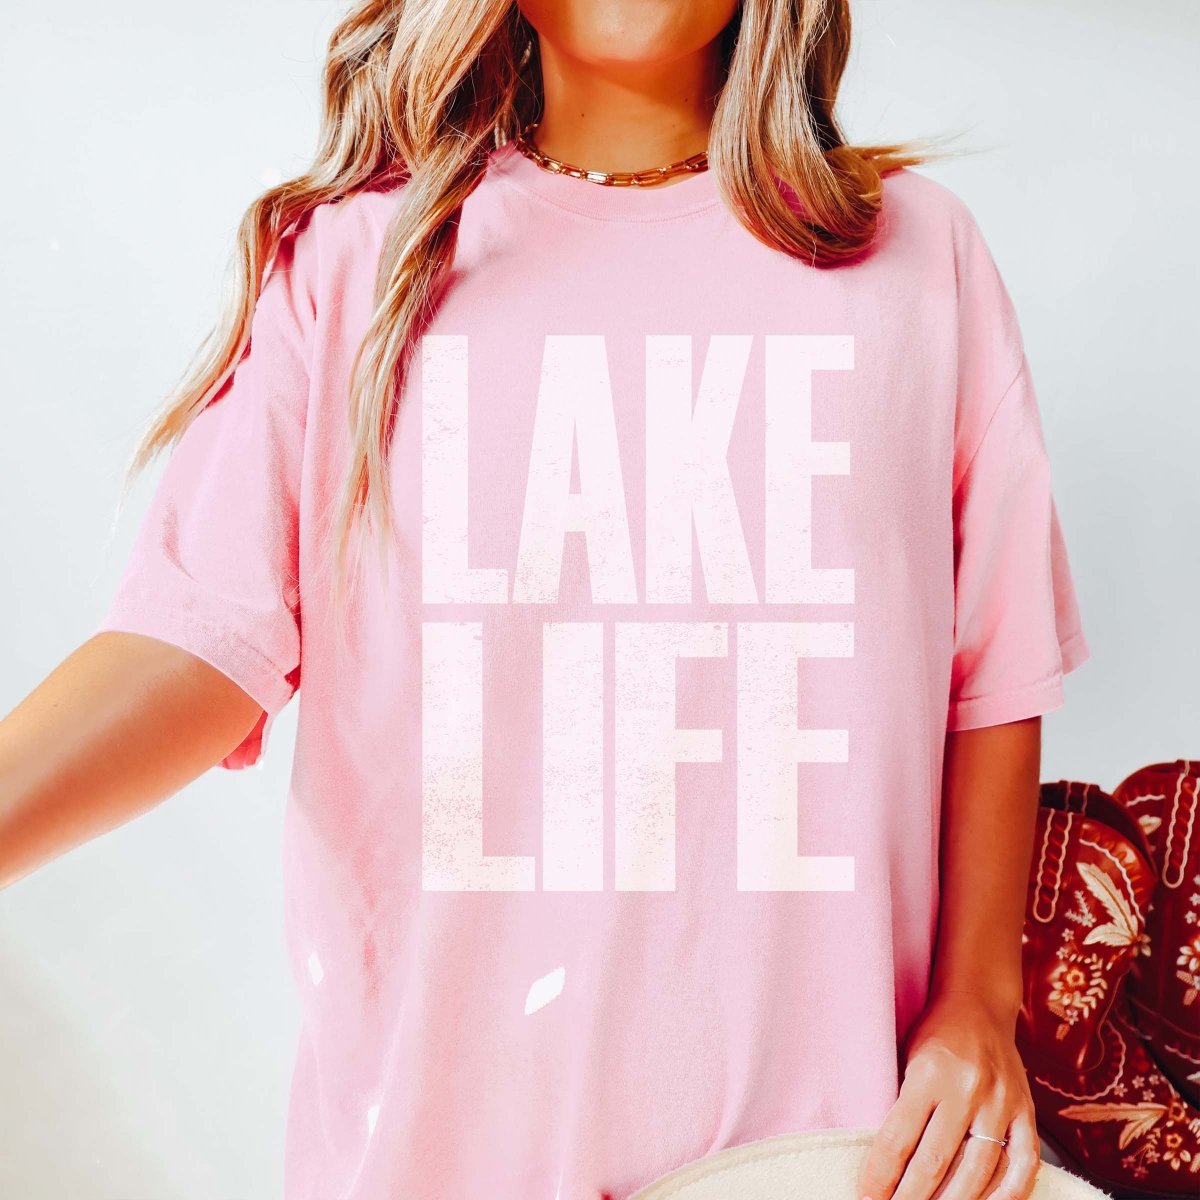 Lake Life Comfort Color Tee - Limeberry Designs